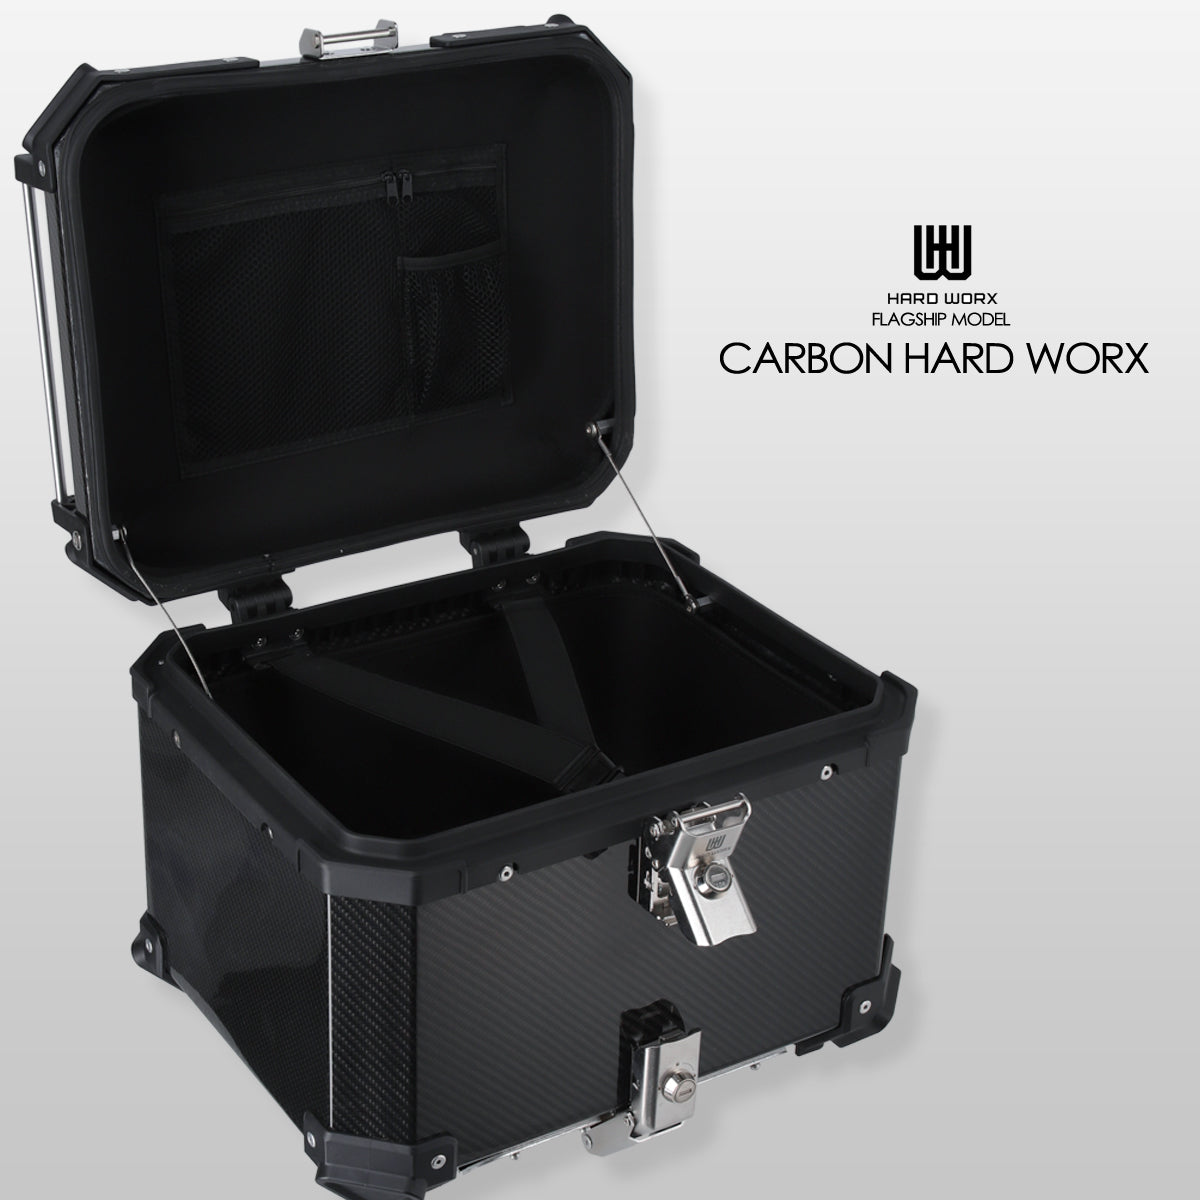 HARD WORX 碳纤维顶箱 45L HX45C